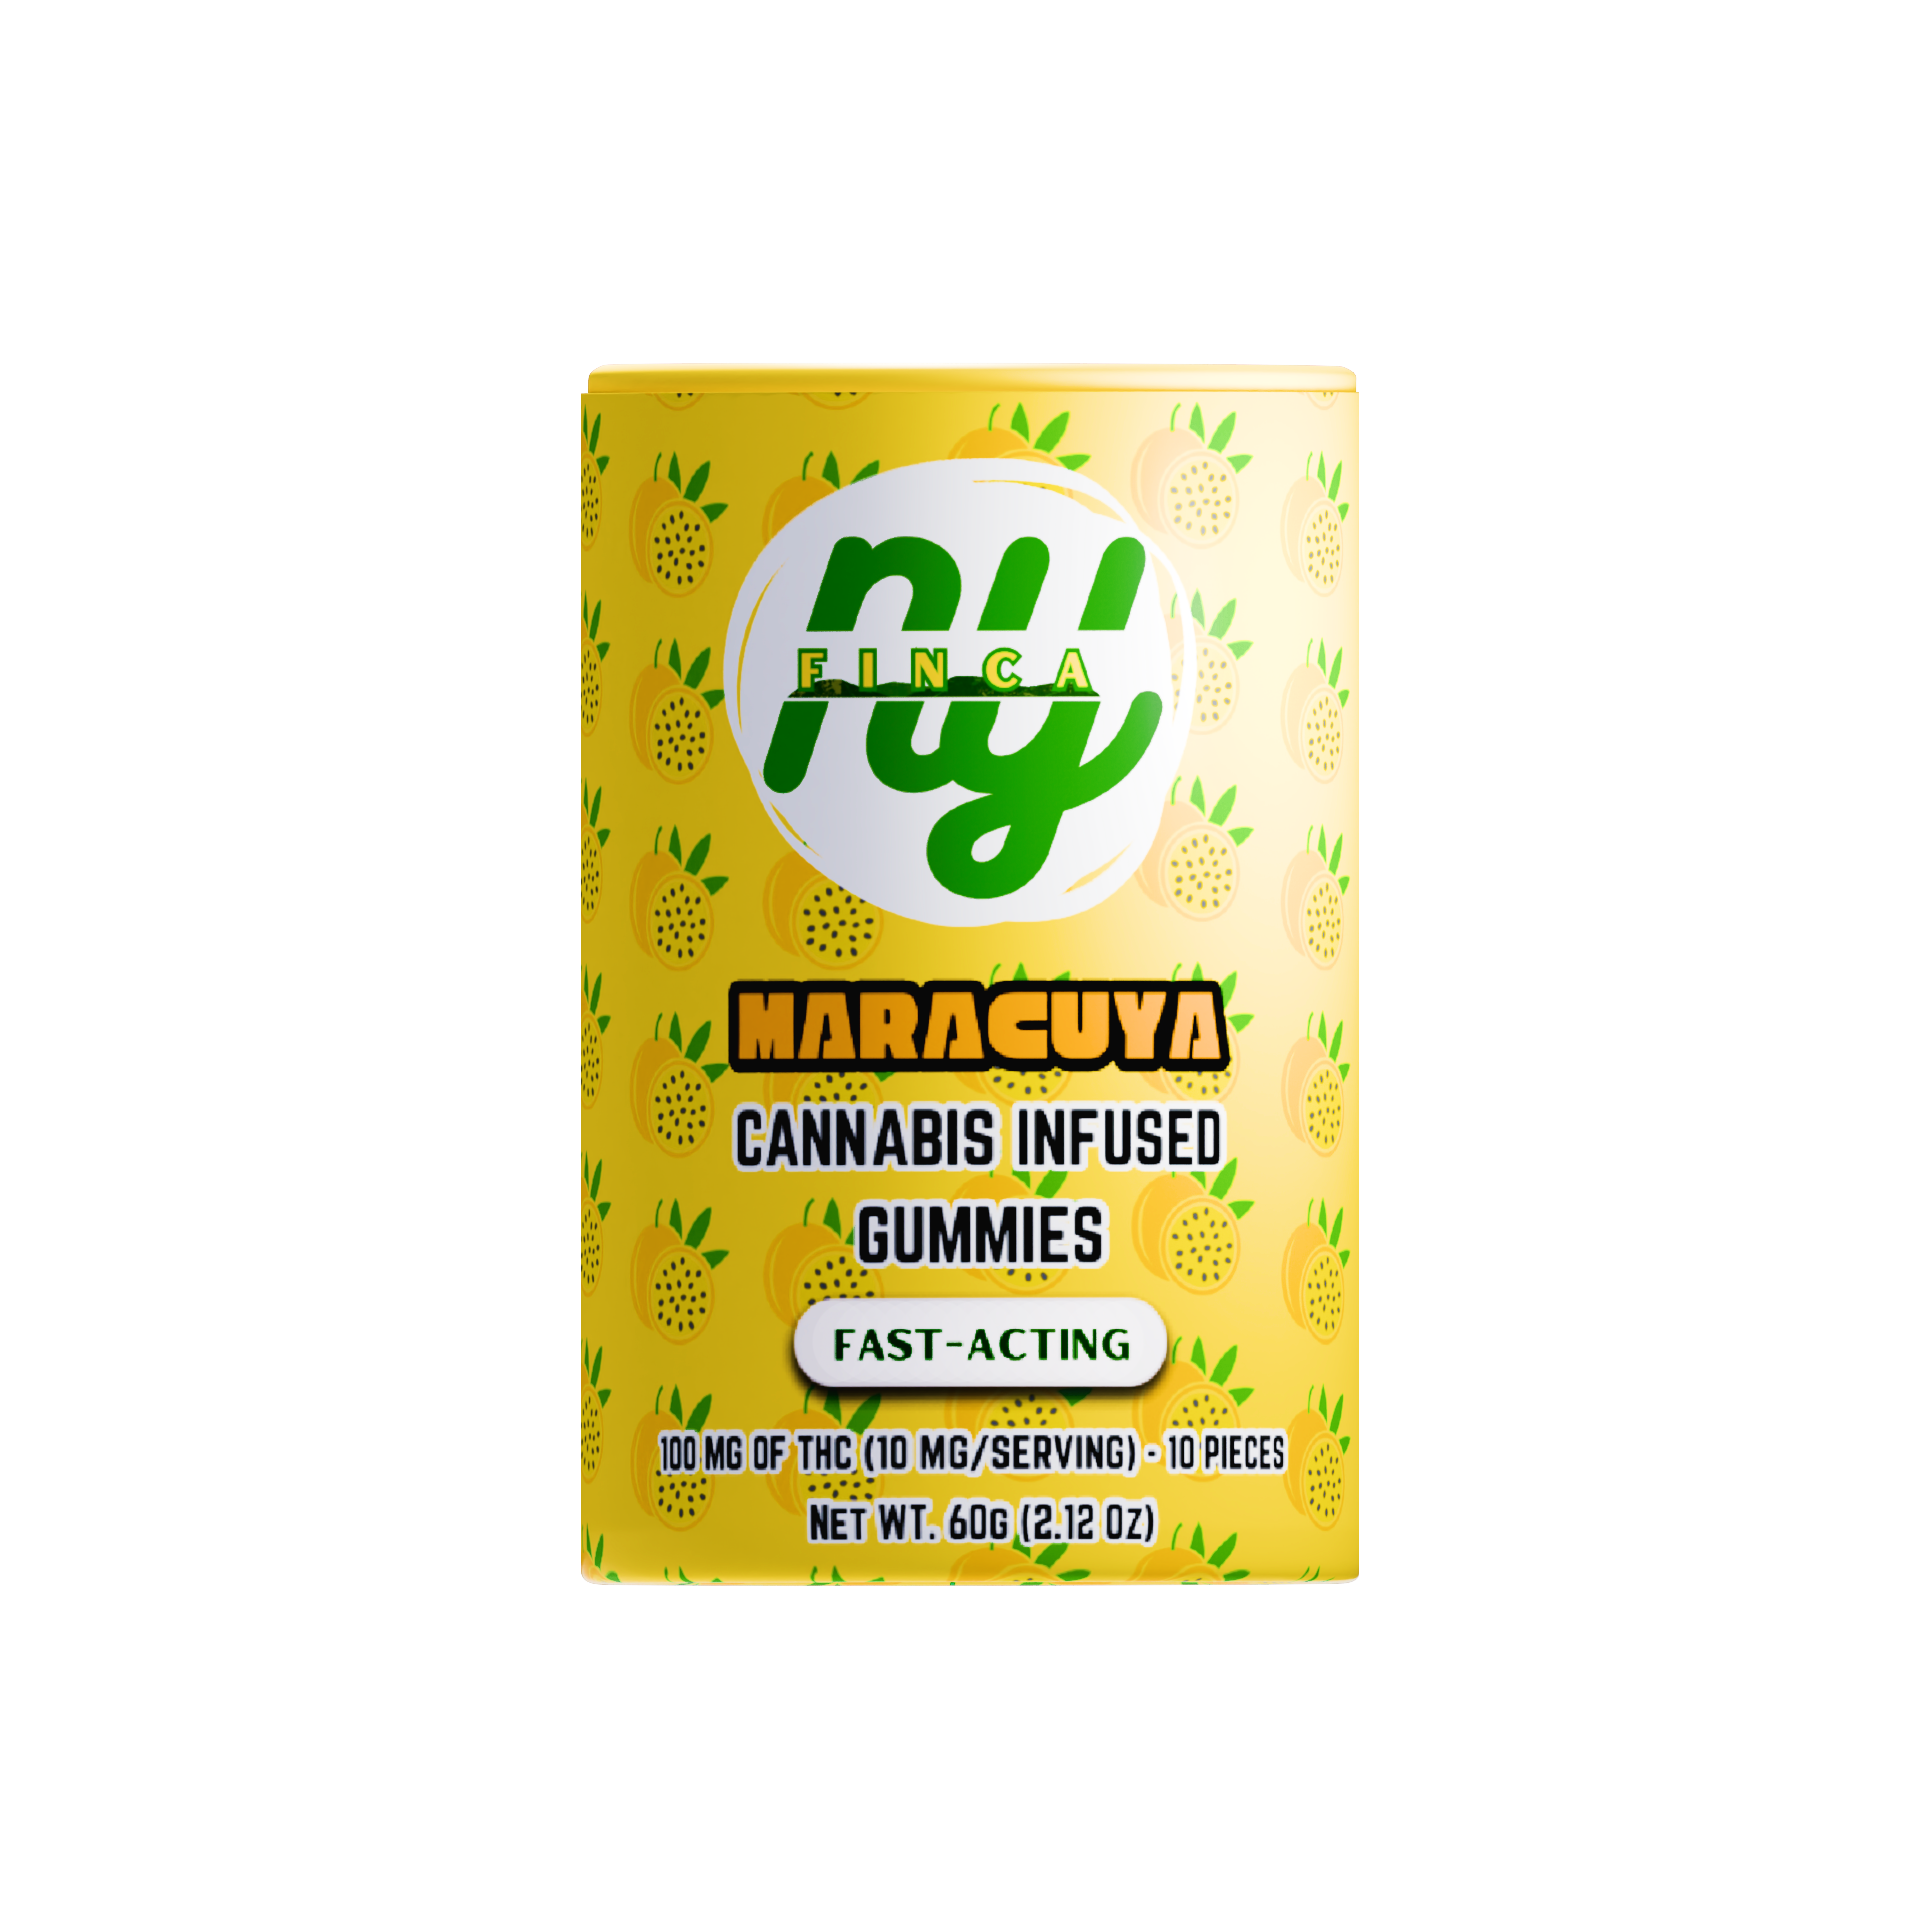 MARACUYA (PASSION FRUIT) GUMMIES